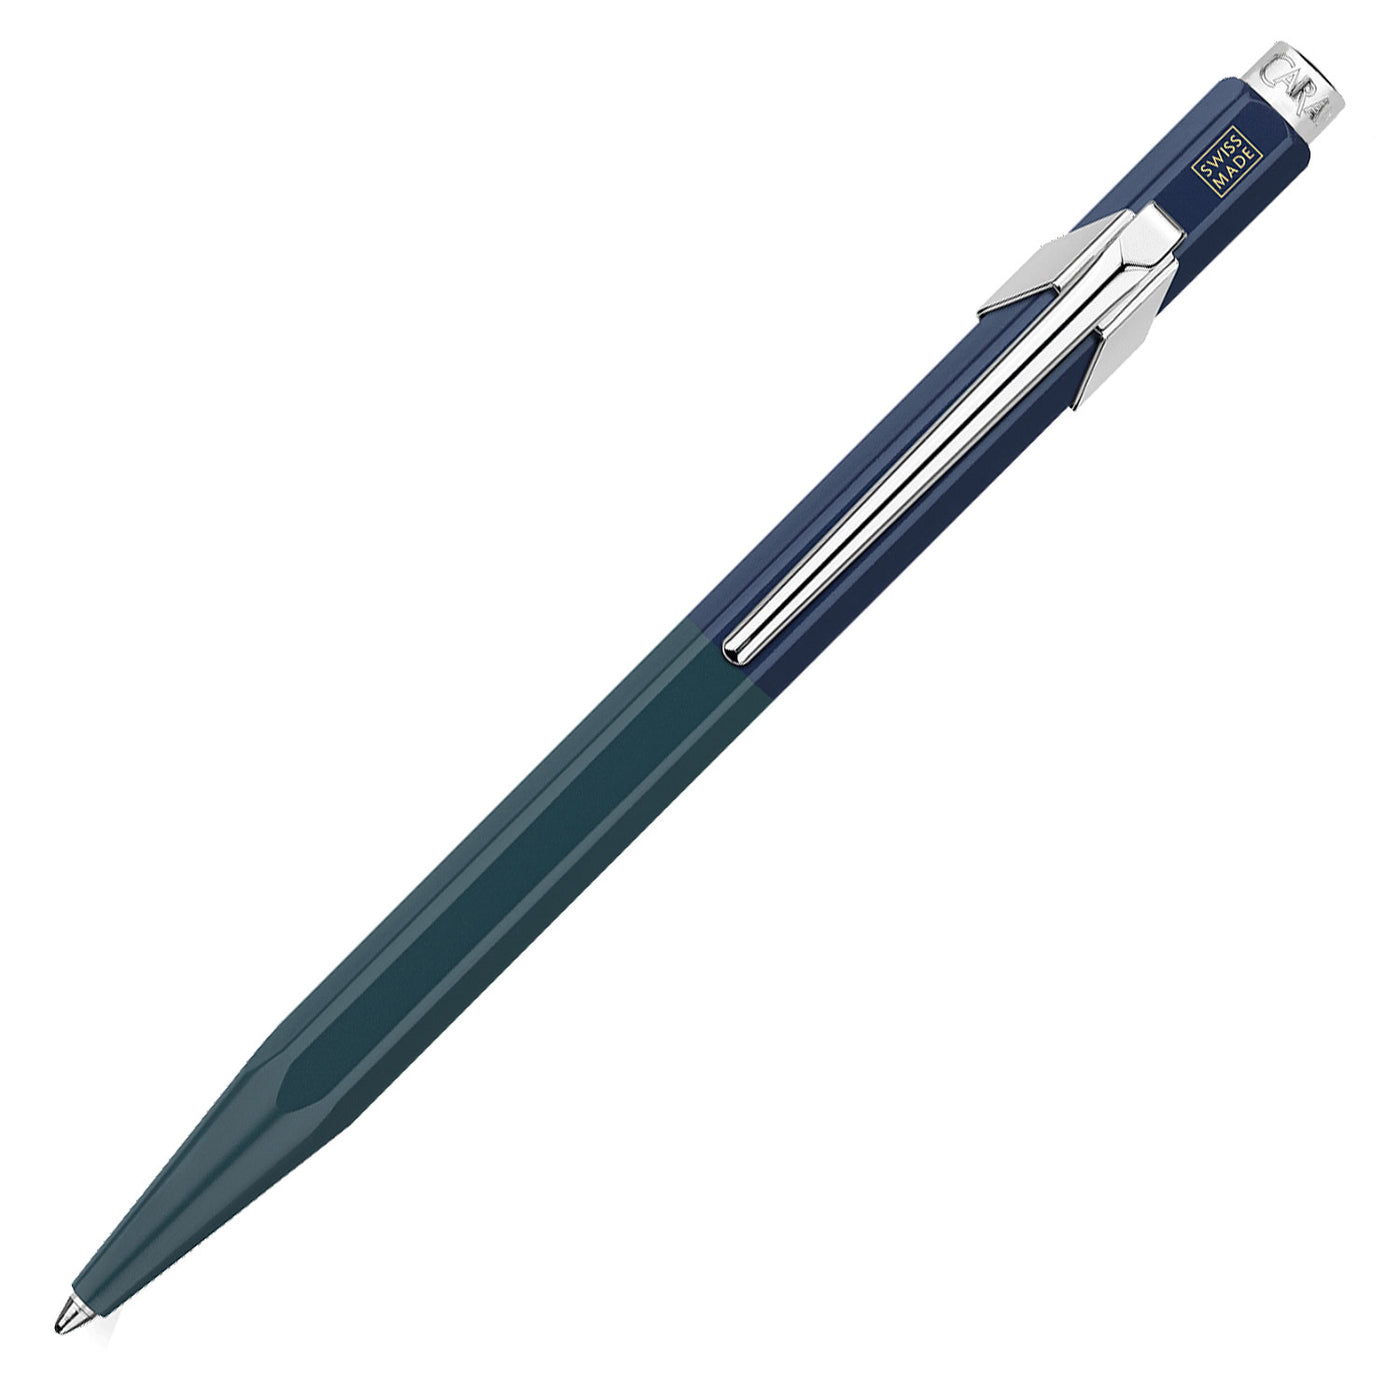 Caran d'Ache 849 Paul Smith Ball Pen - Racing Green & Navy Blue (Limited Edition) 1